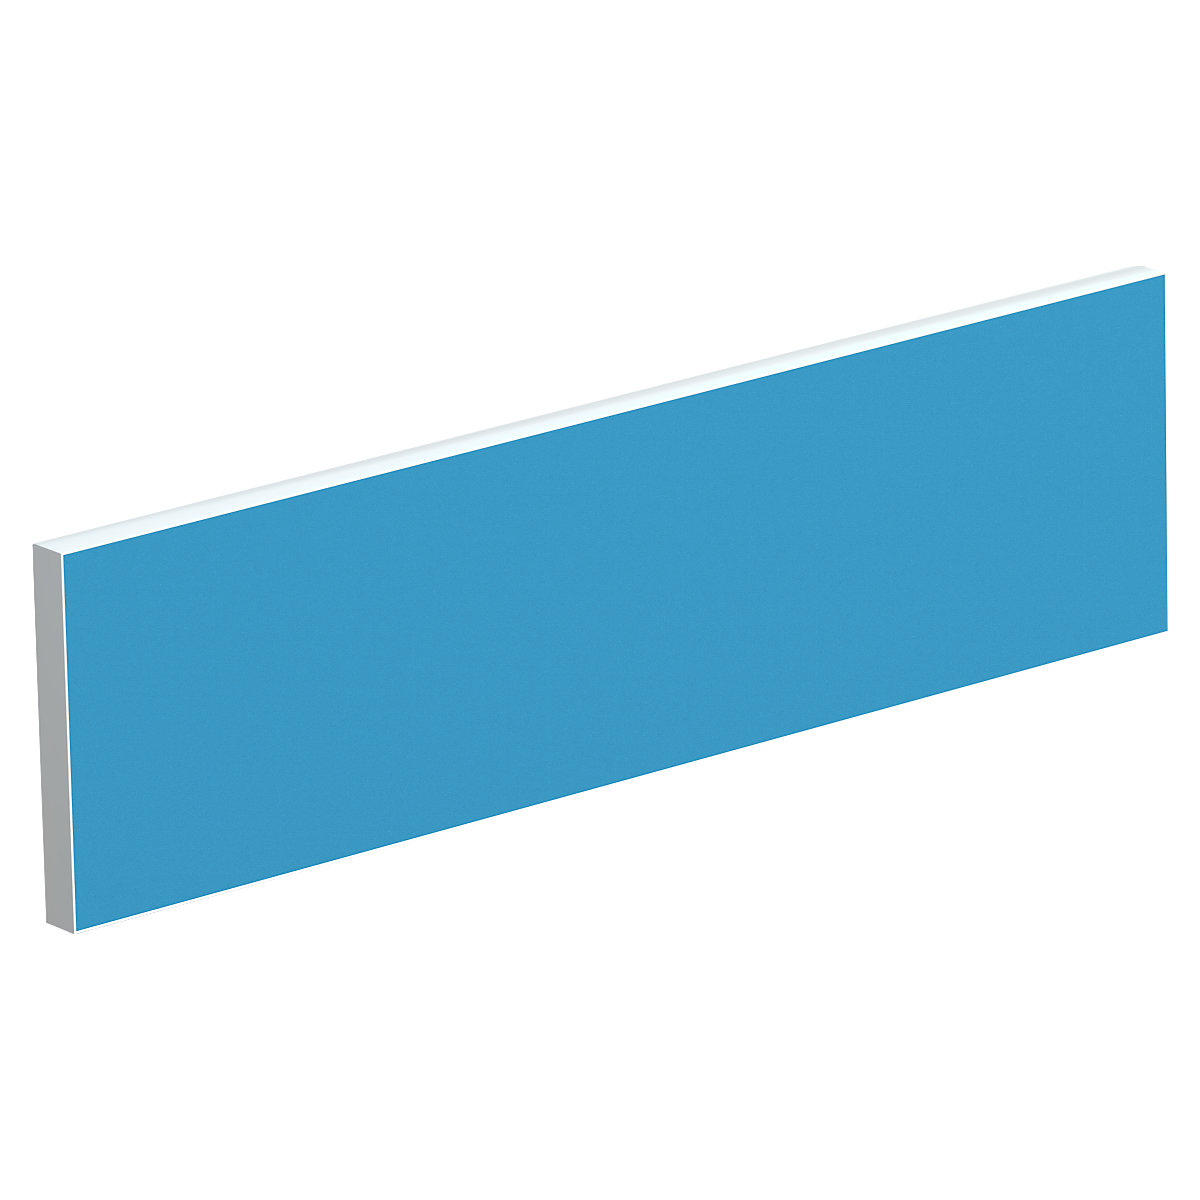 Table partition for team desks, width 1600 mm, blue cover-6